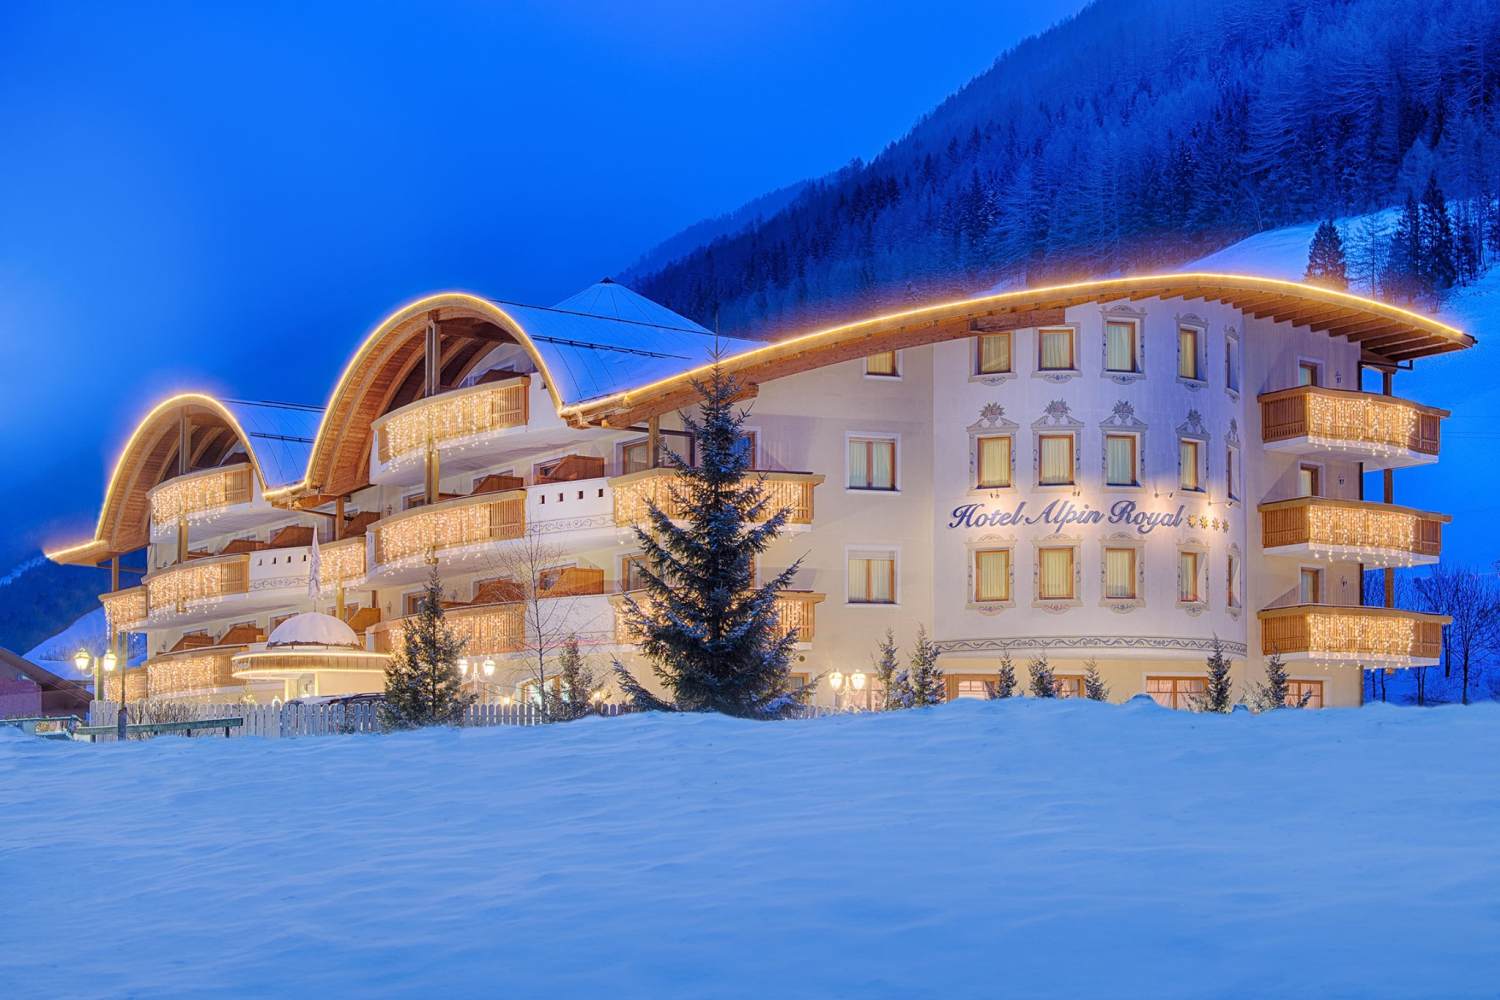 Hotel Alpin Royal Valle Aurina, South Tyrol - Italy